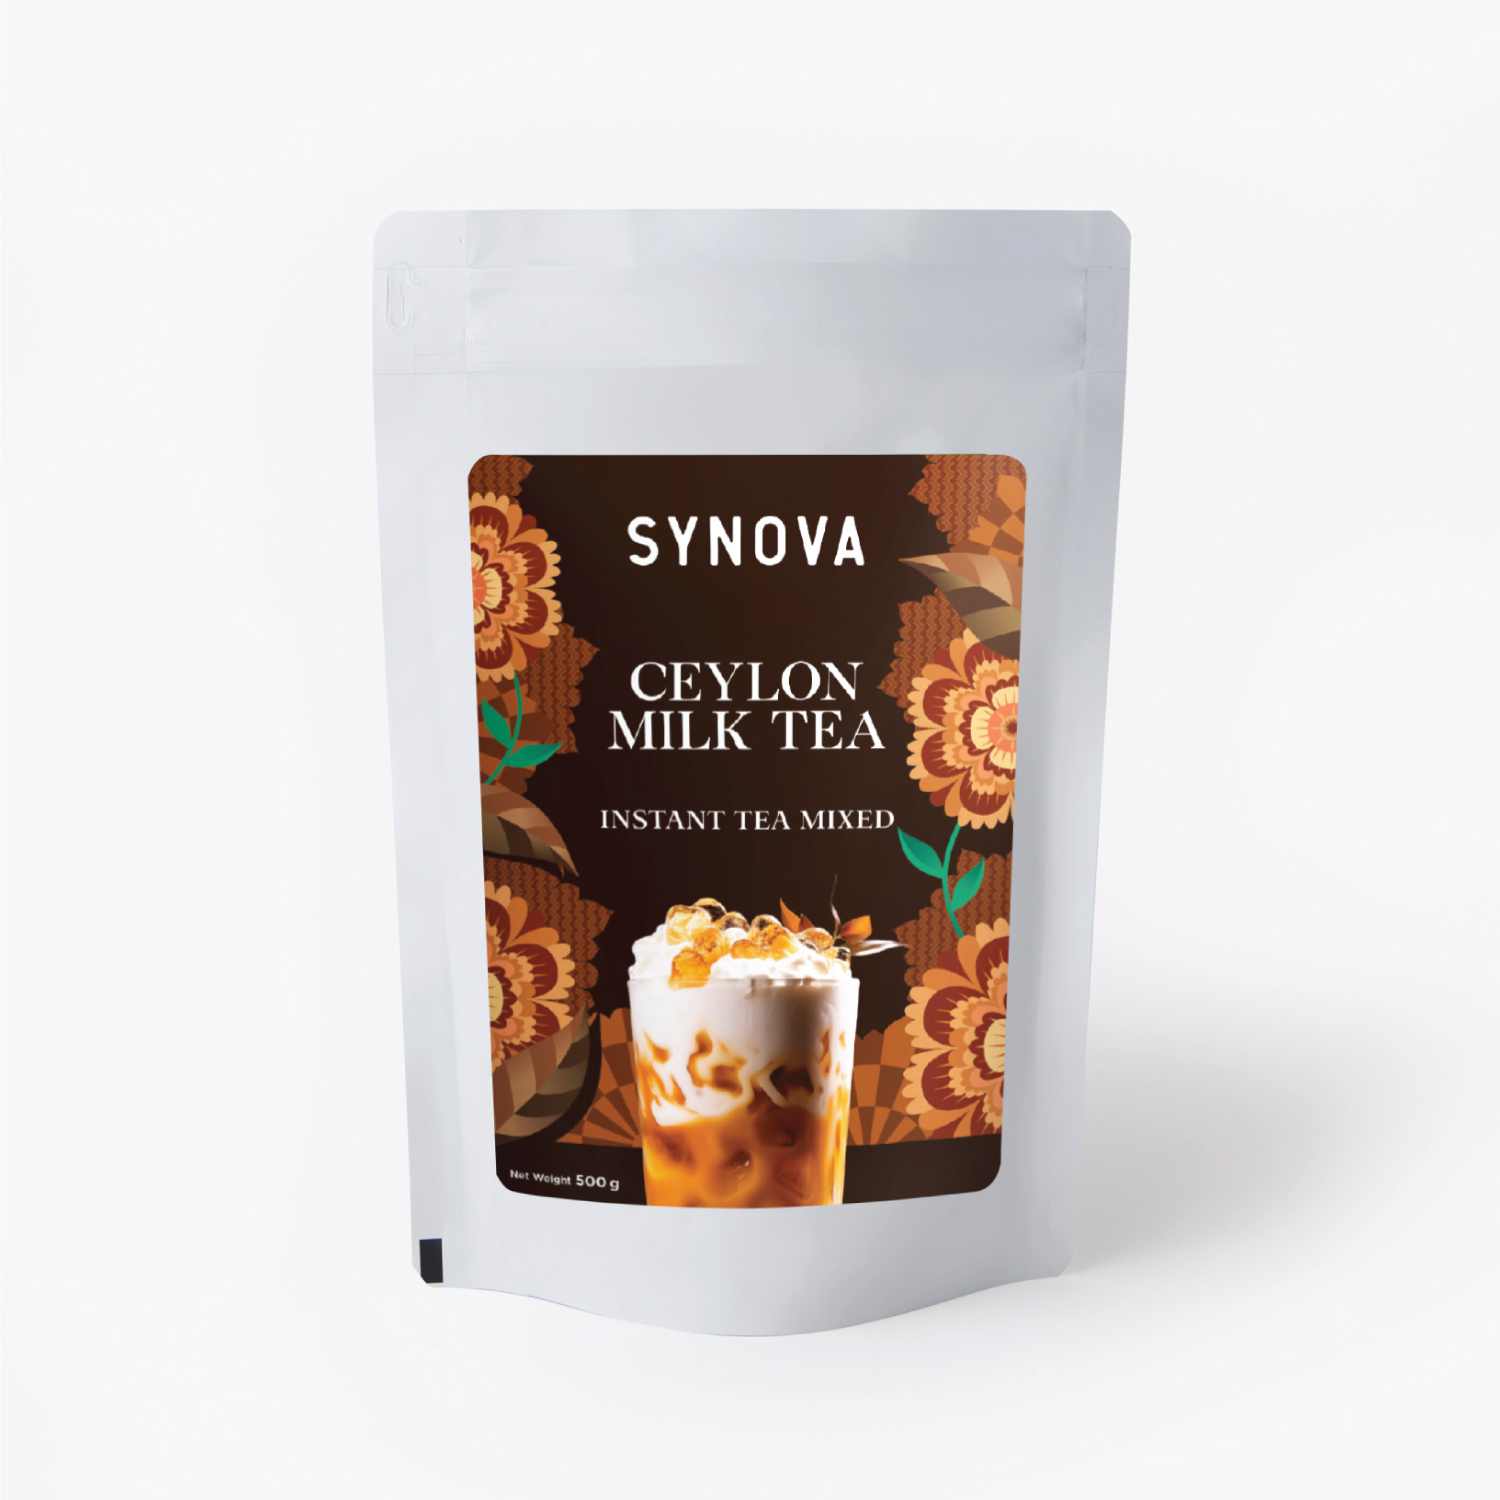 SYNOVA Ceylon Milk Tea Premix (Box)